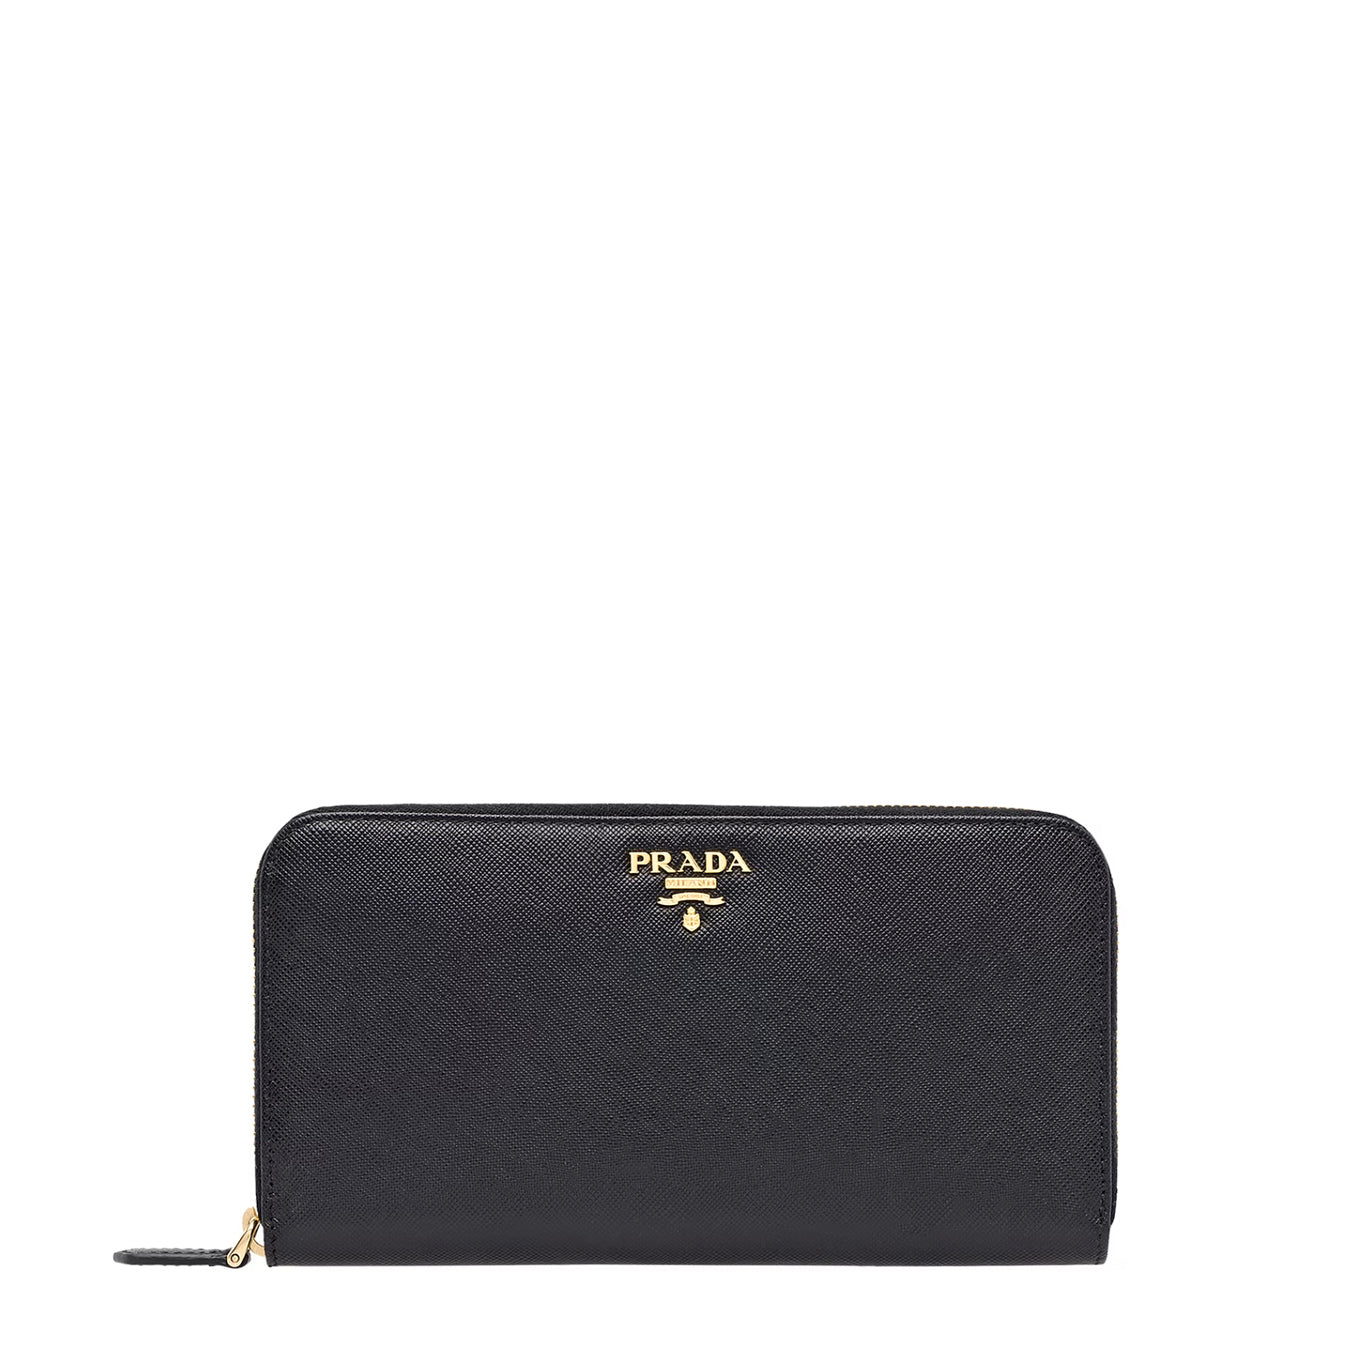 Prada Women's Multi-Compartment Leather Zip Wallet in Black